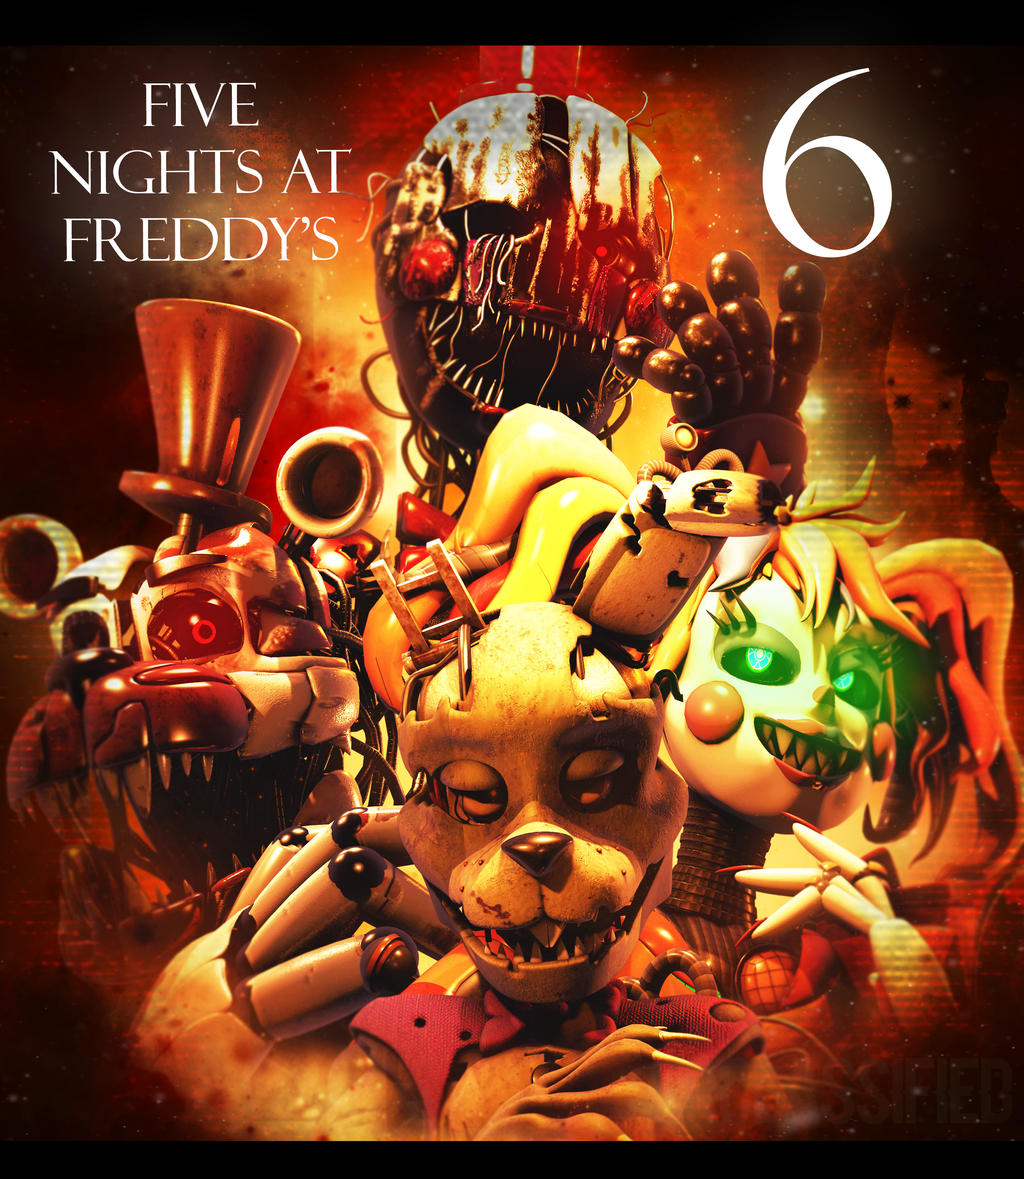 SFM-FNAF] Molten Freddy Poster by Bun-Zai on DeviantArt